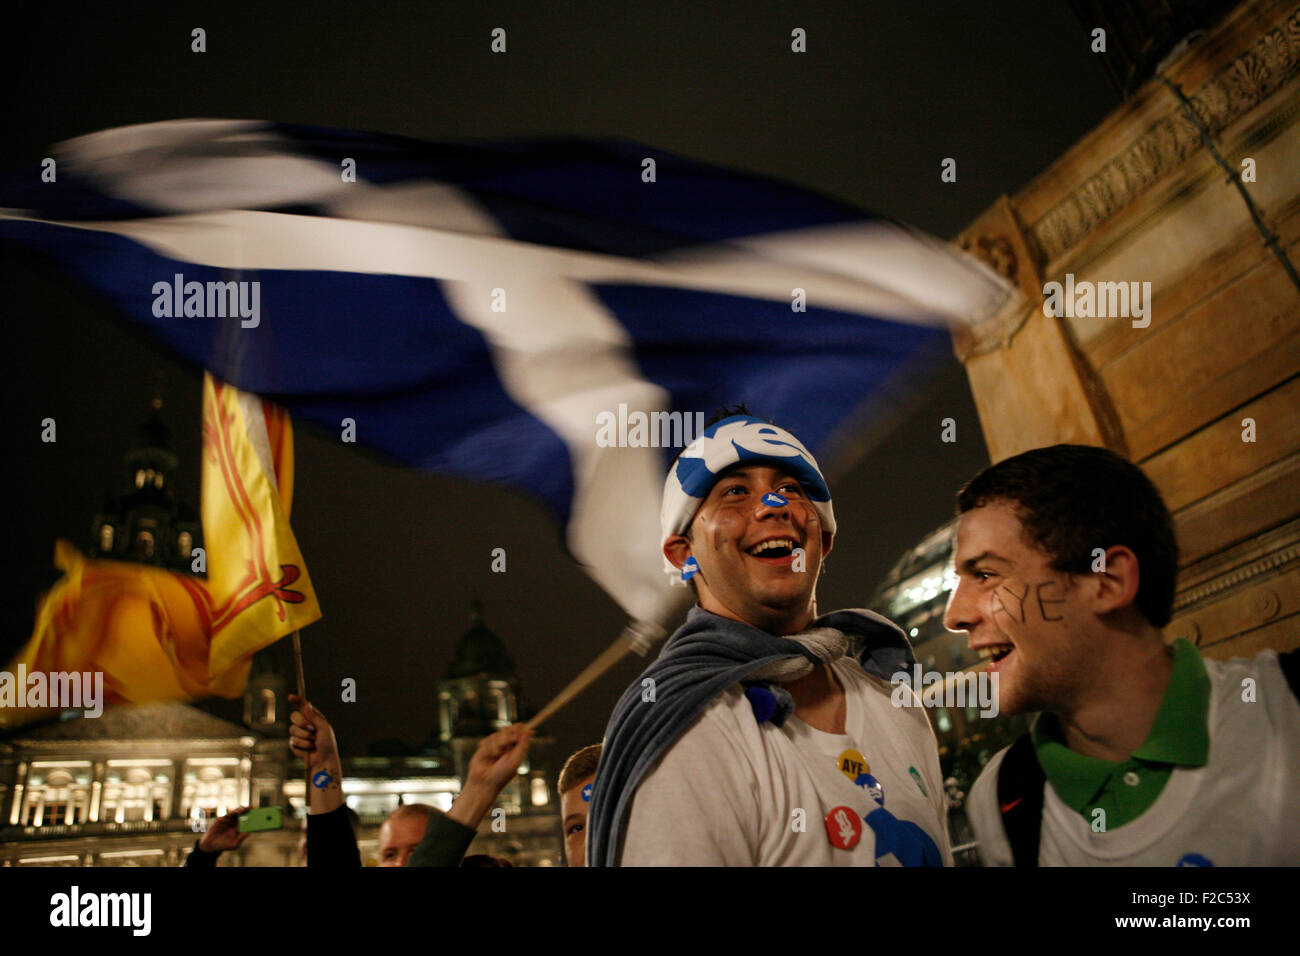 scotland referendum voting day George square. Stock Photo